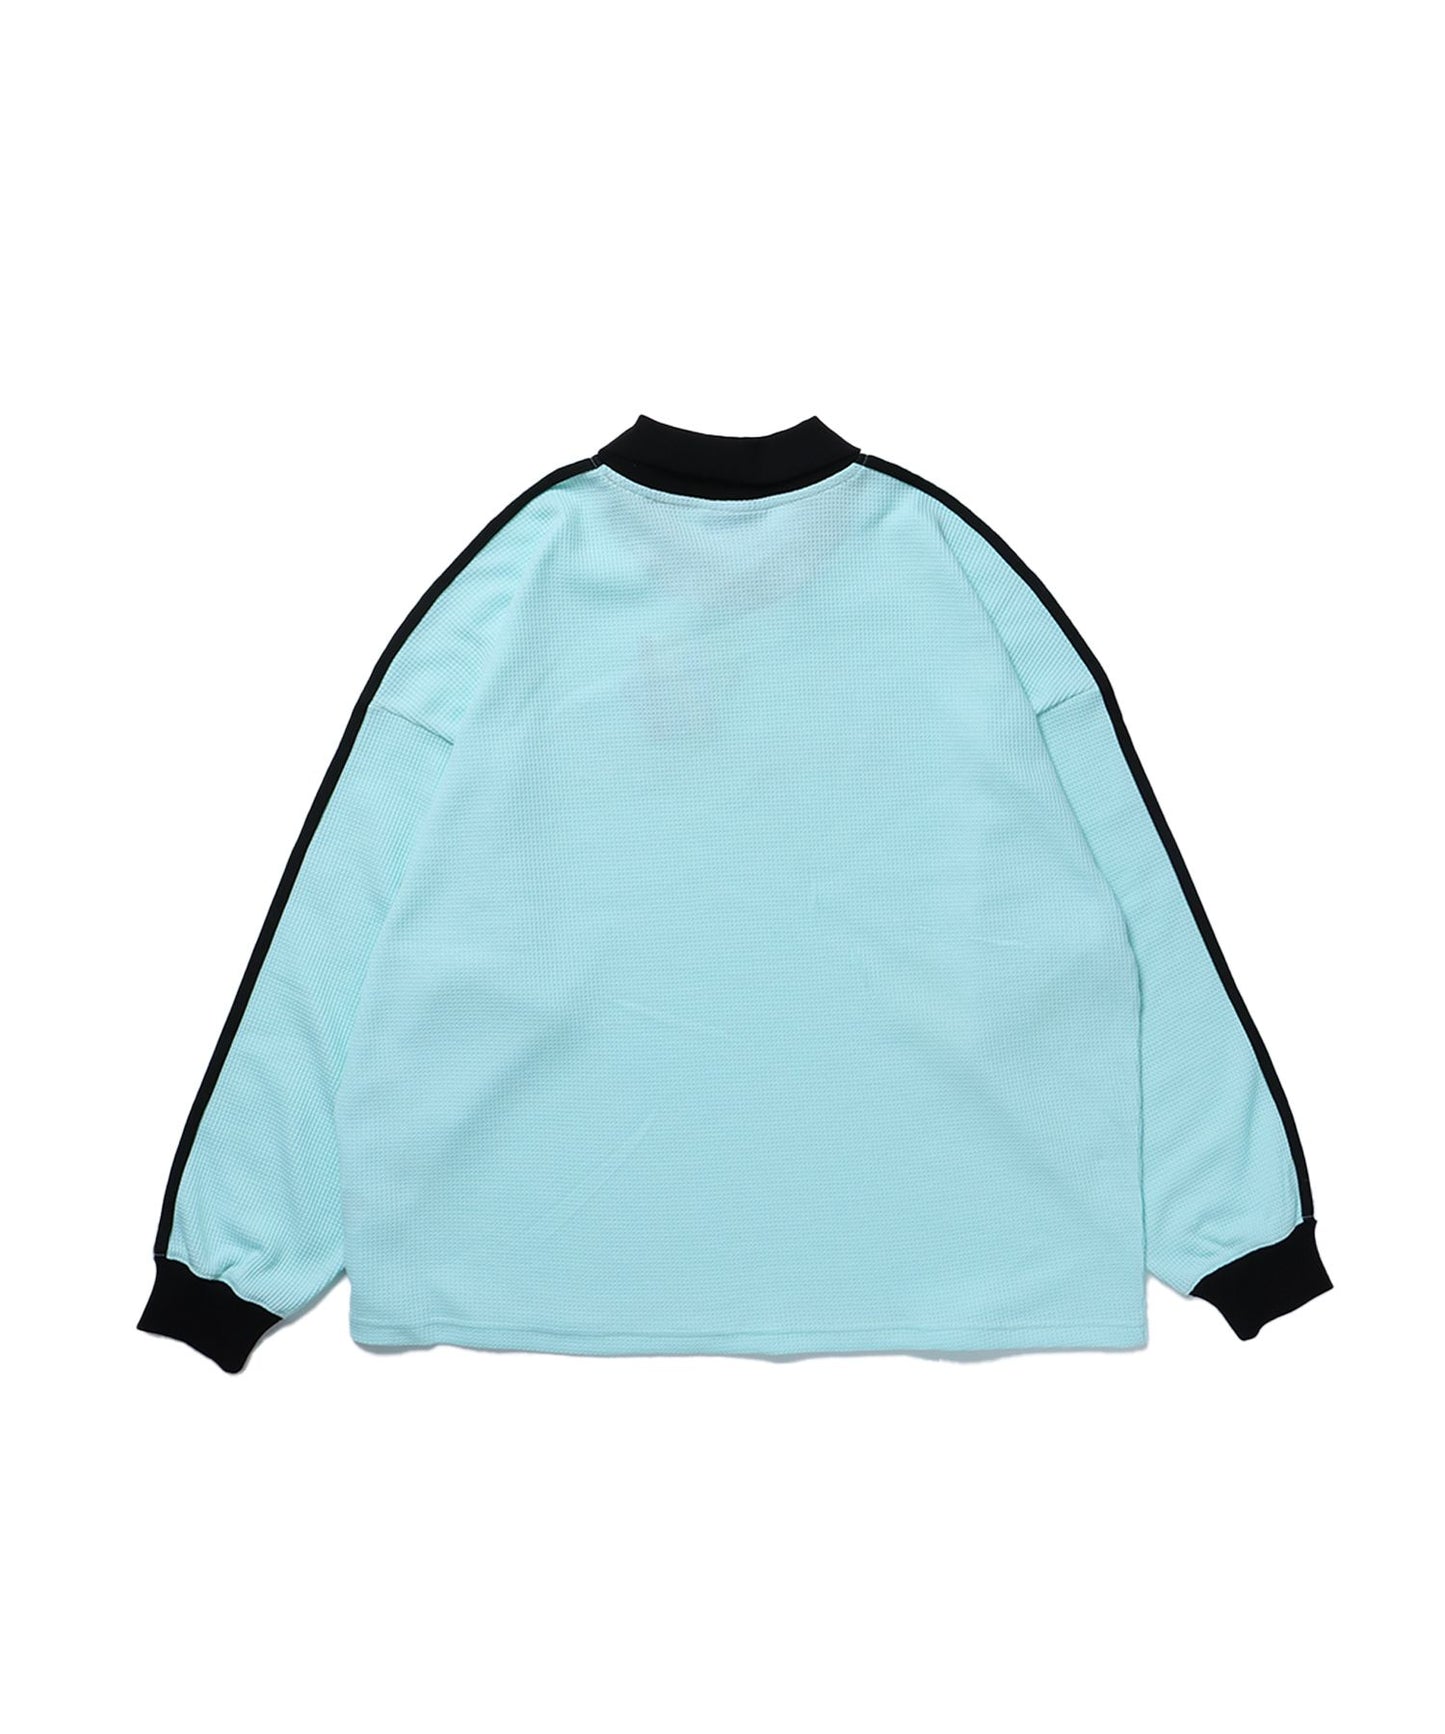 【SEQUENZ】 配色 オーバーサイズ ゲームシャツ サイドライン ターコイズブルー